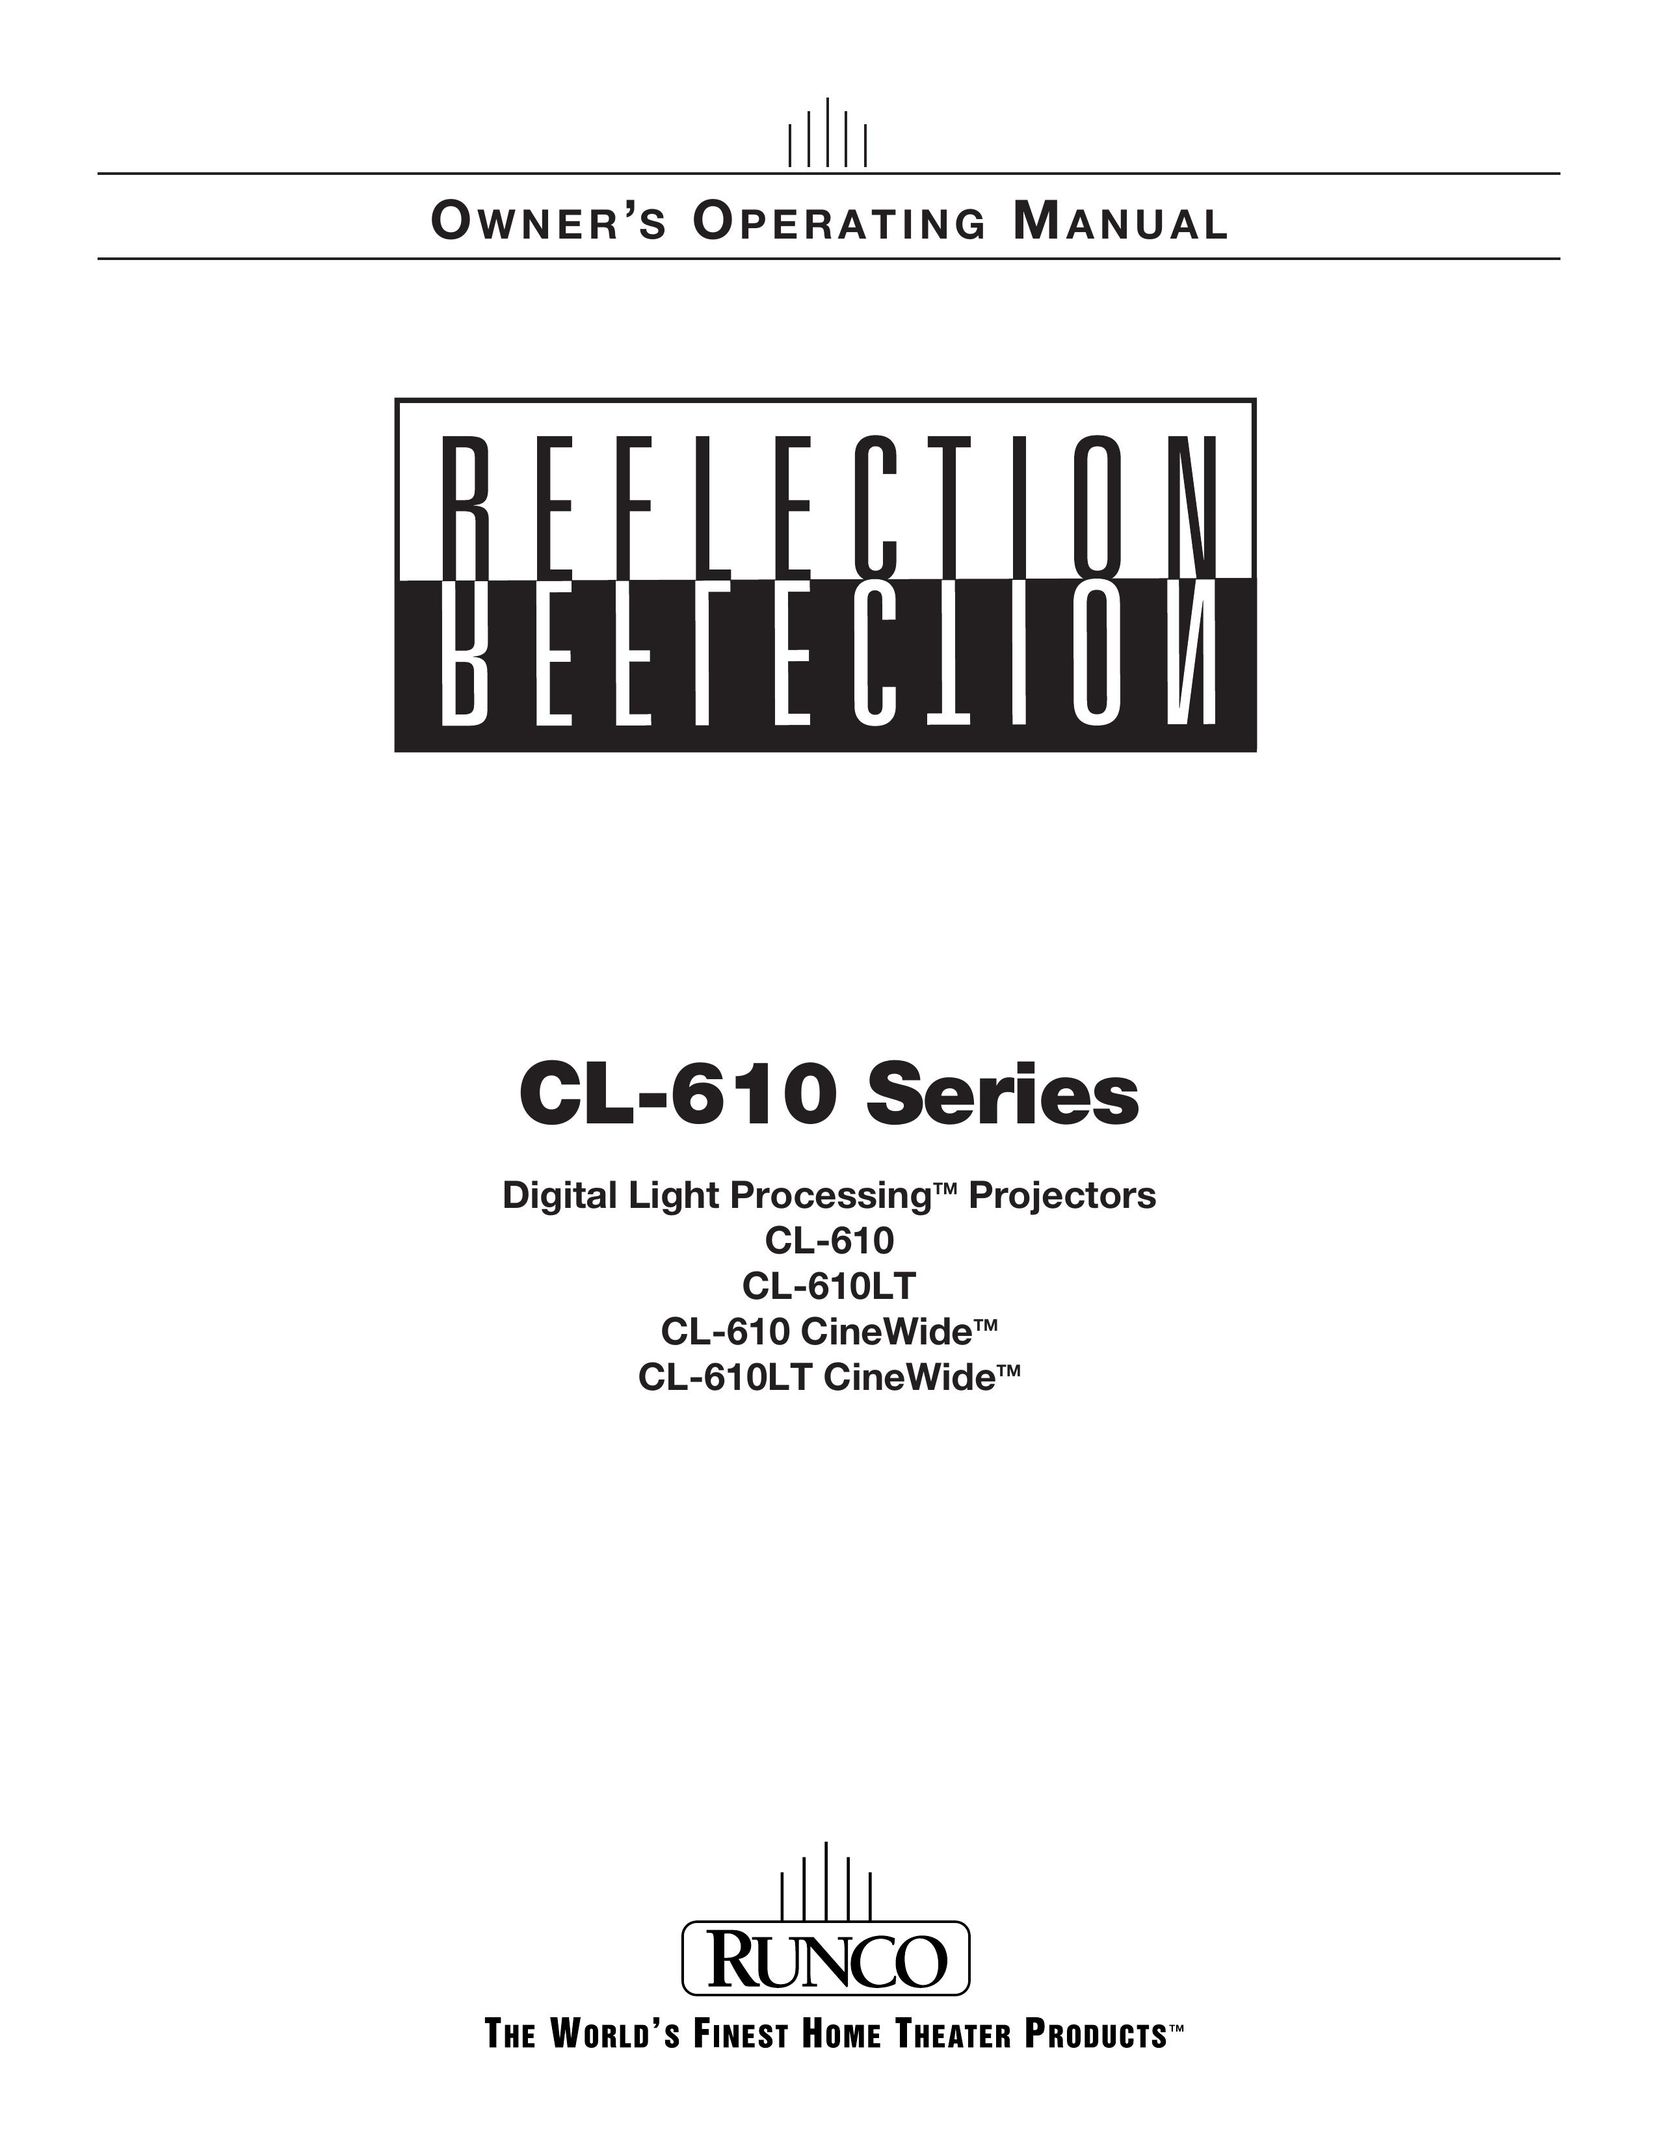 Runco CL-610 Projector User Manual